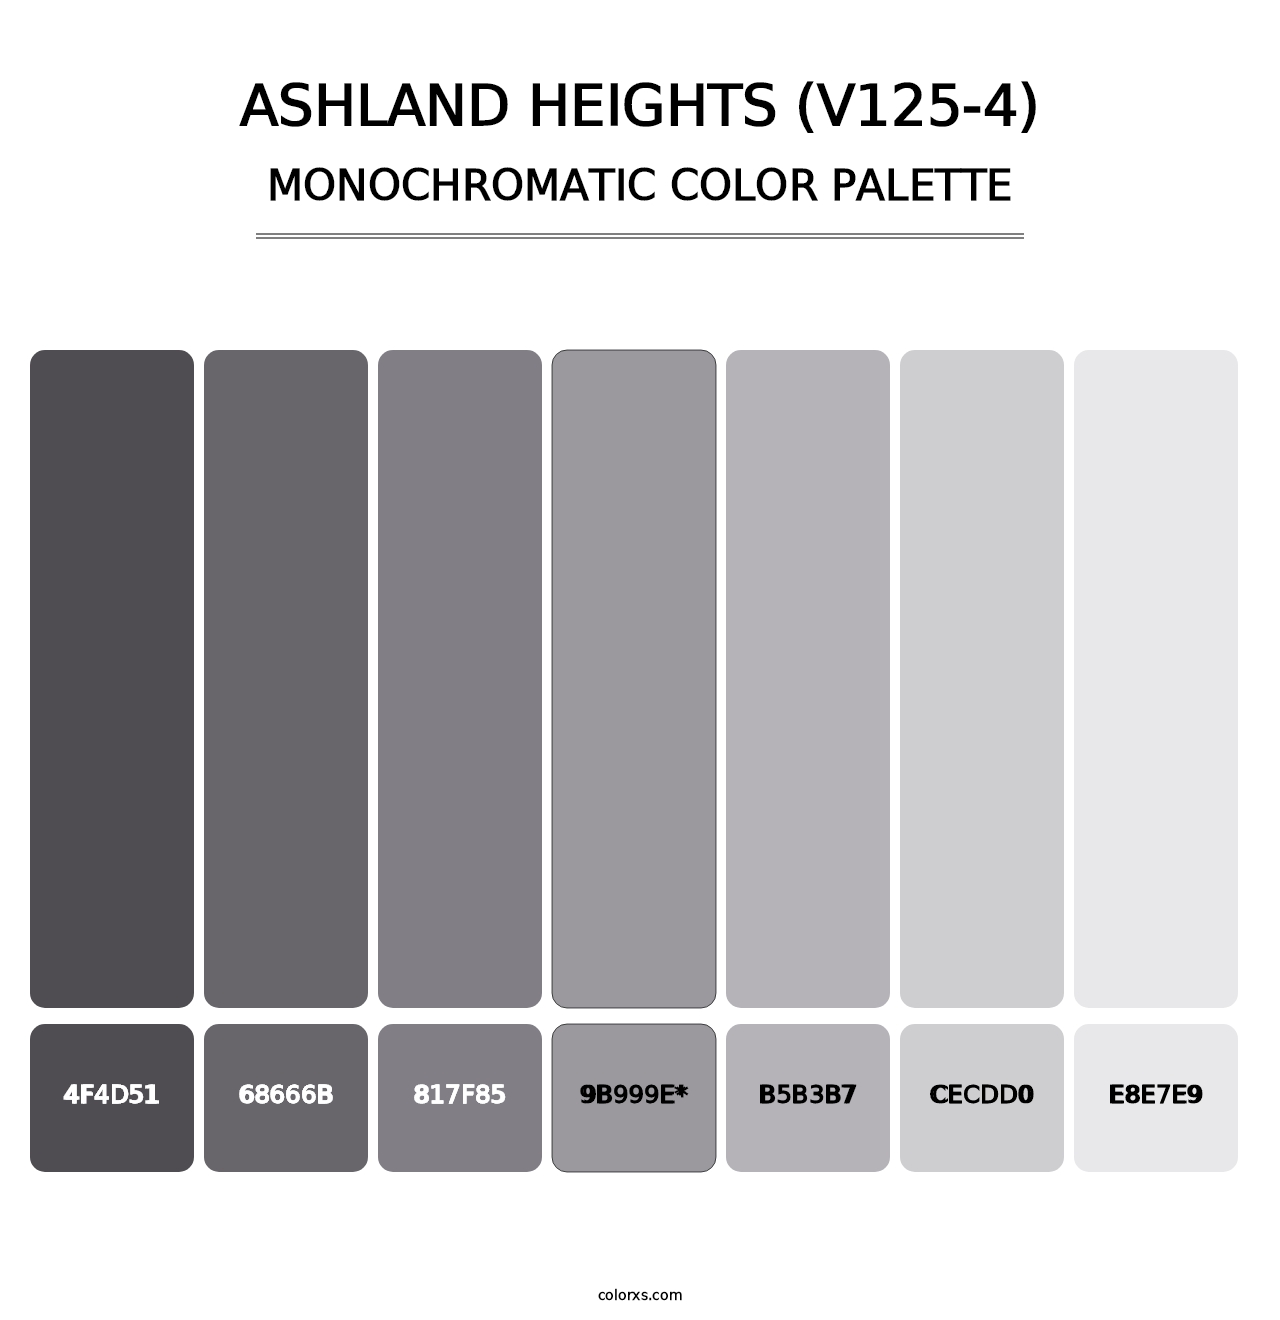 Ashland Heights (V125-4) - Monochromatic Color Palette